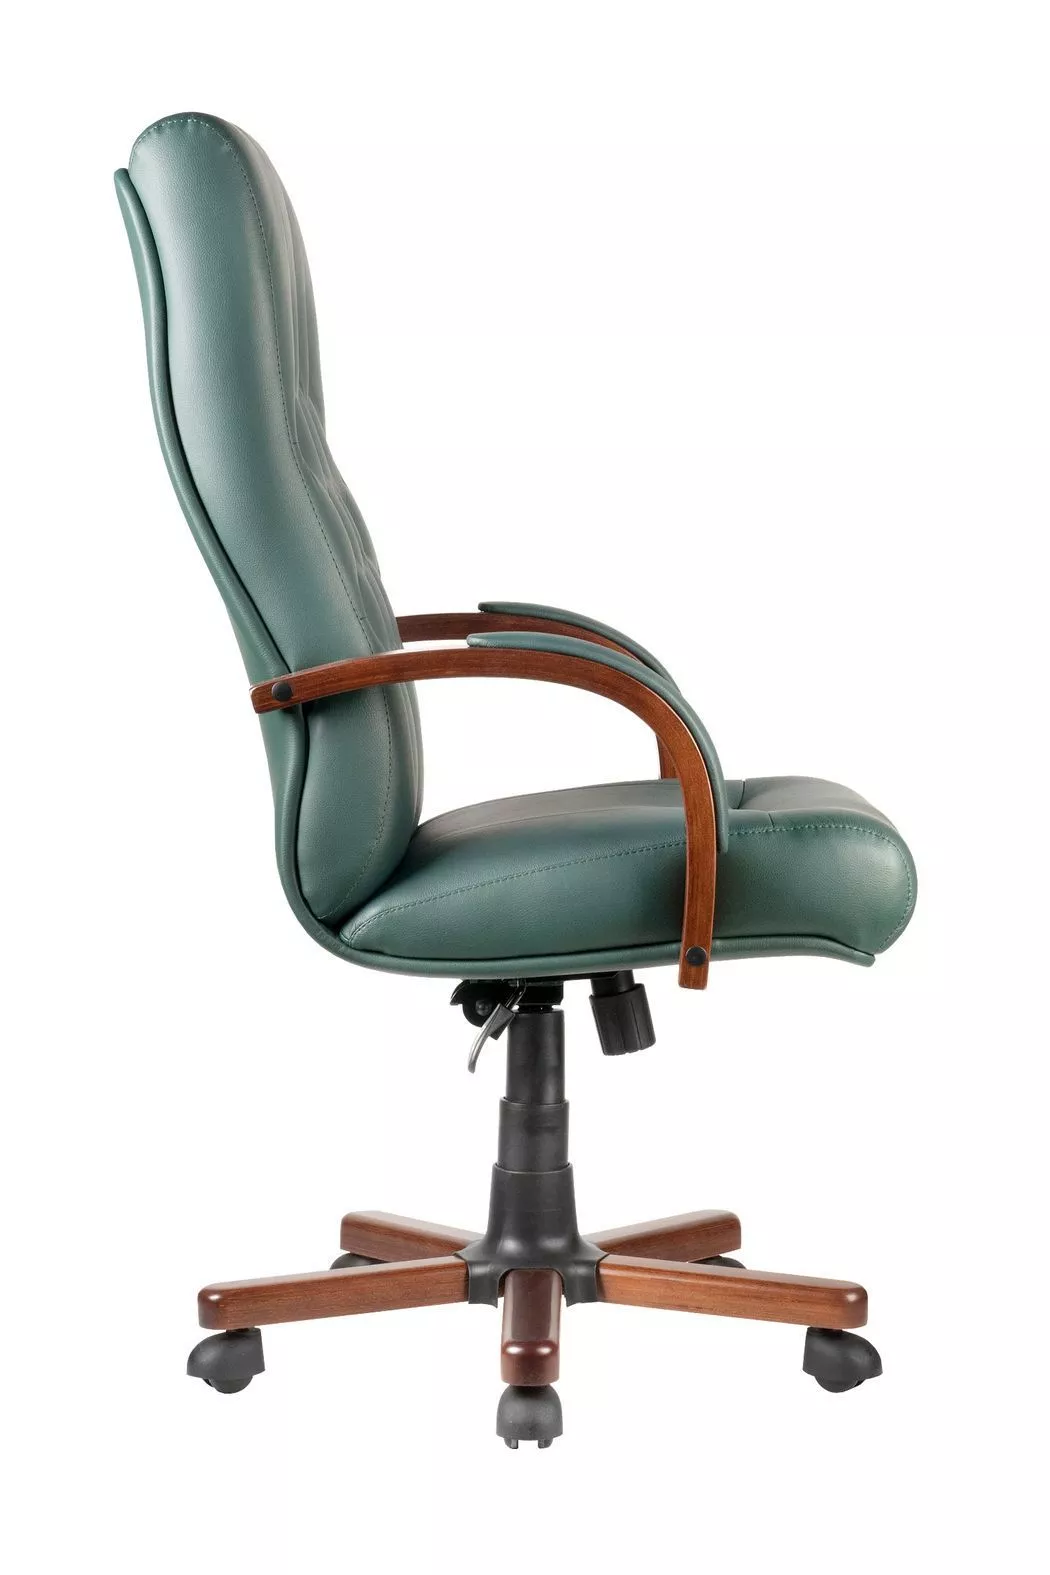 Кресло руководителя Riva Chair WOOD M 175 A зеленый